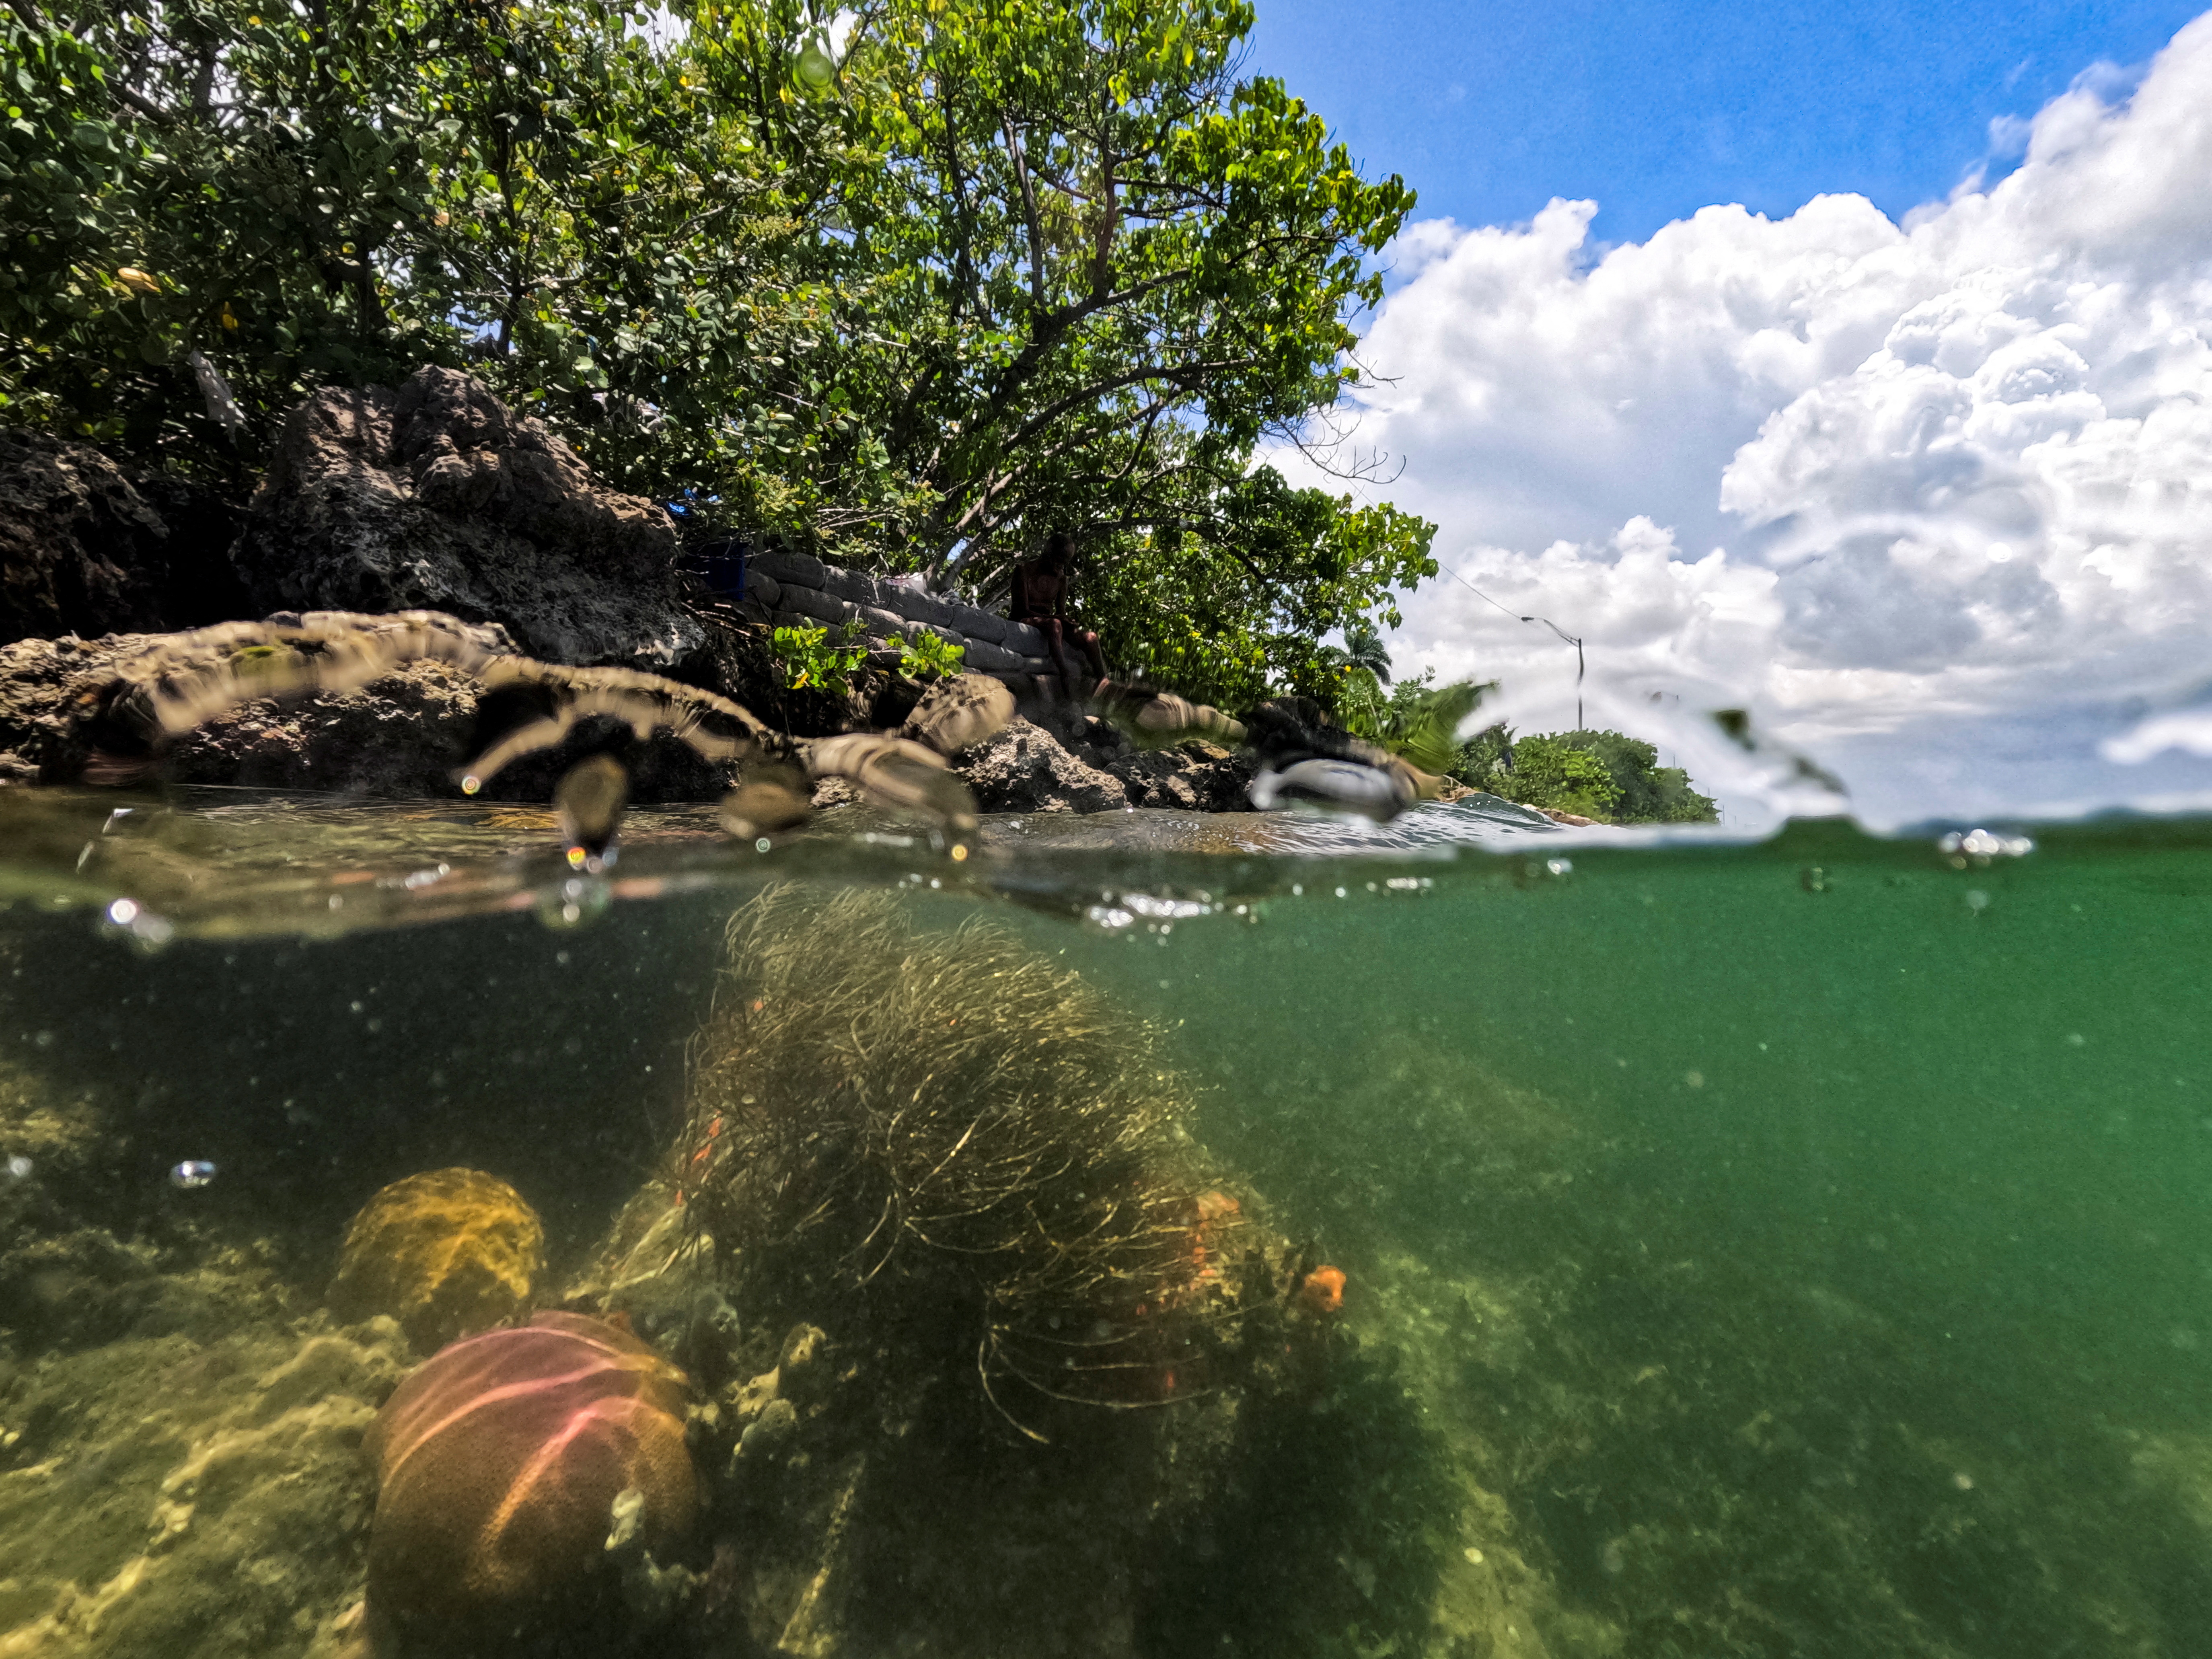 High temperatures threaten Florida's coral reefs